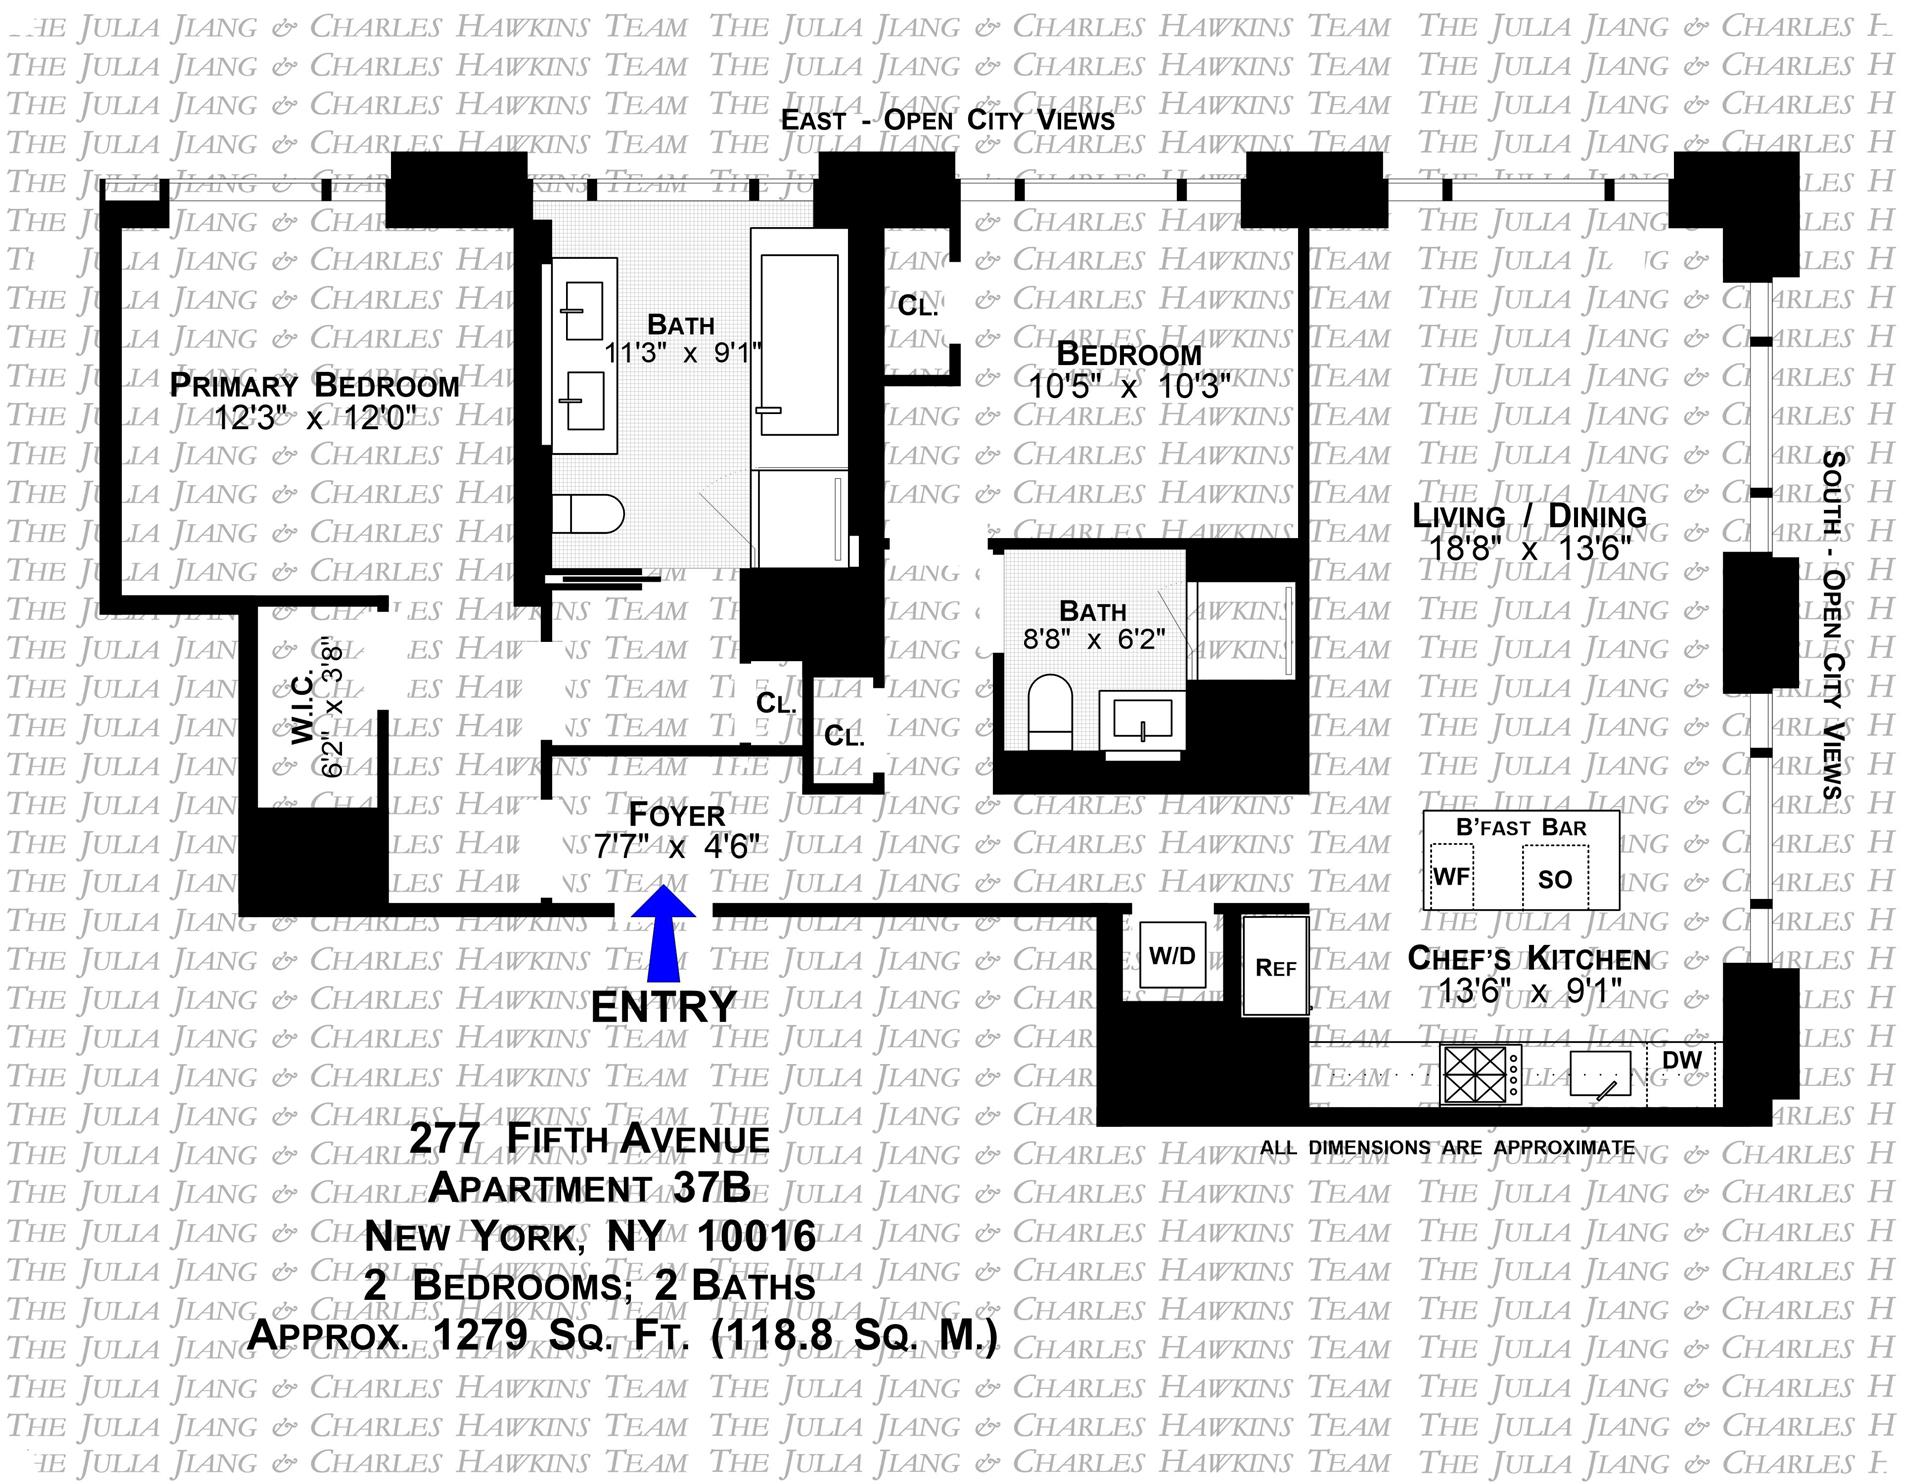 Floorplan for 277 5th Avenue, 37B